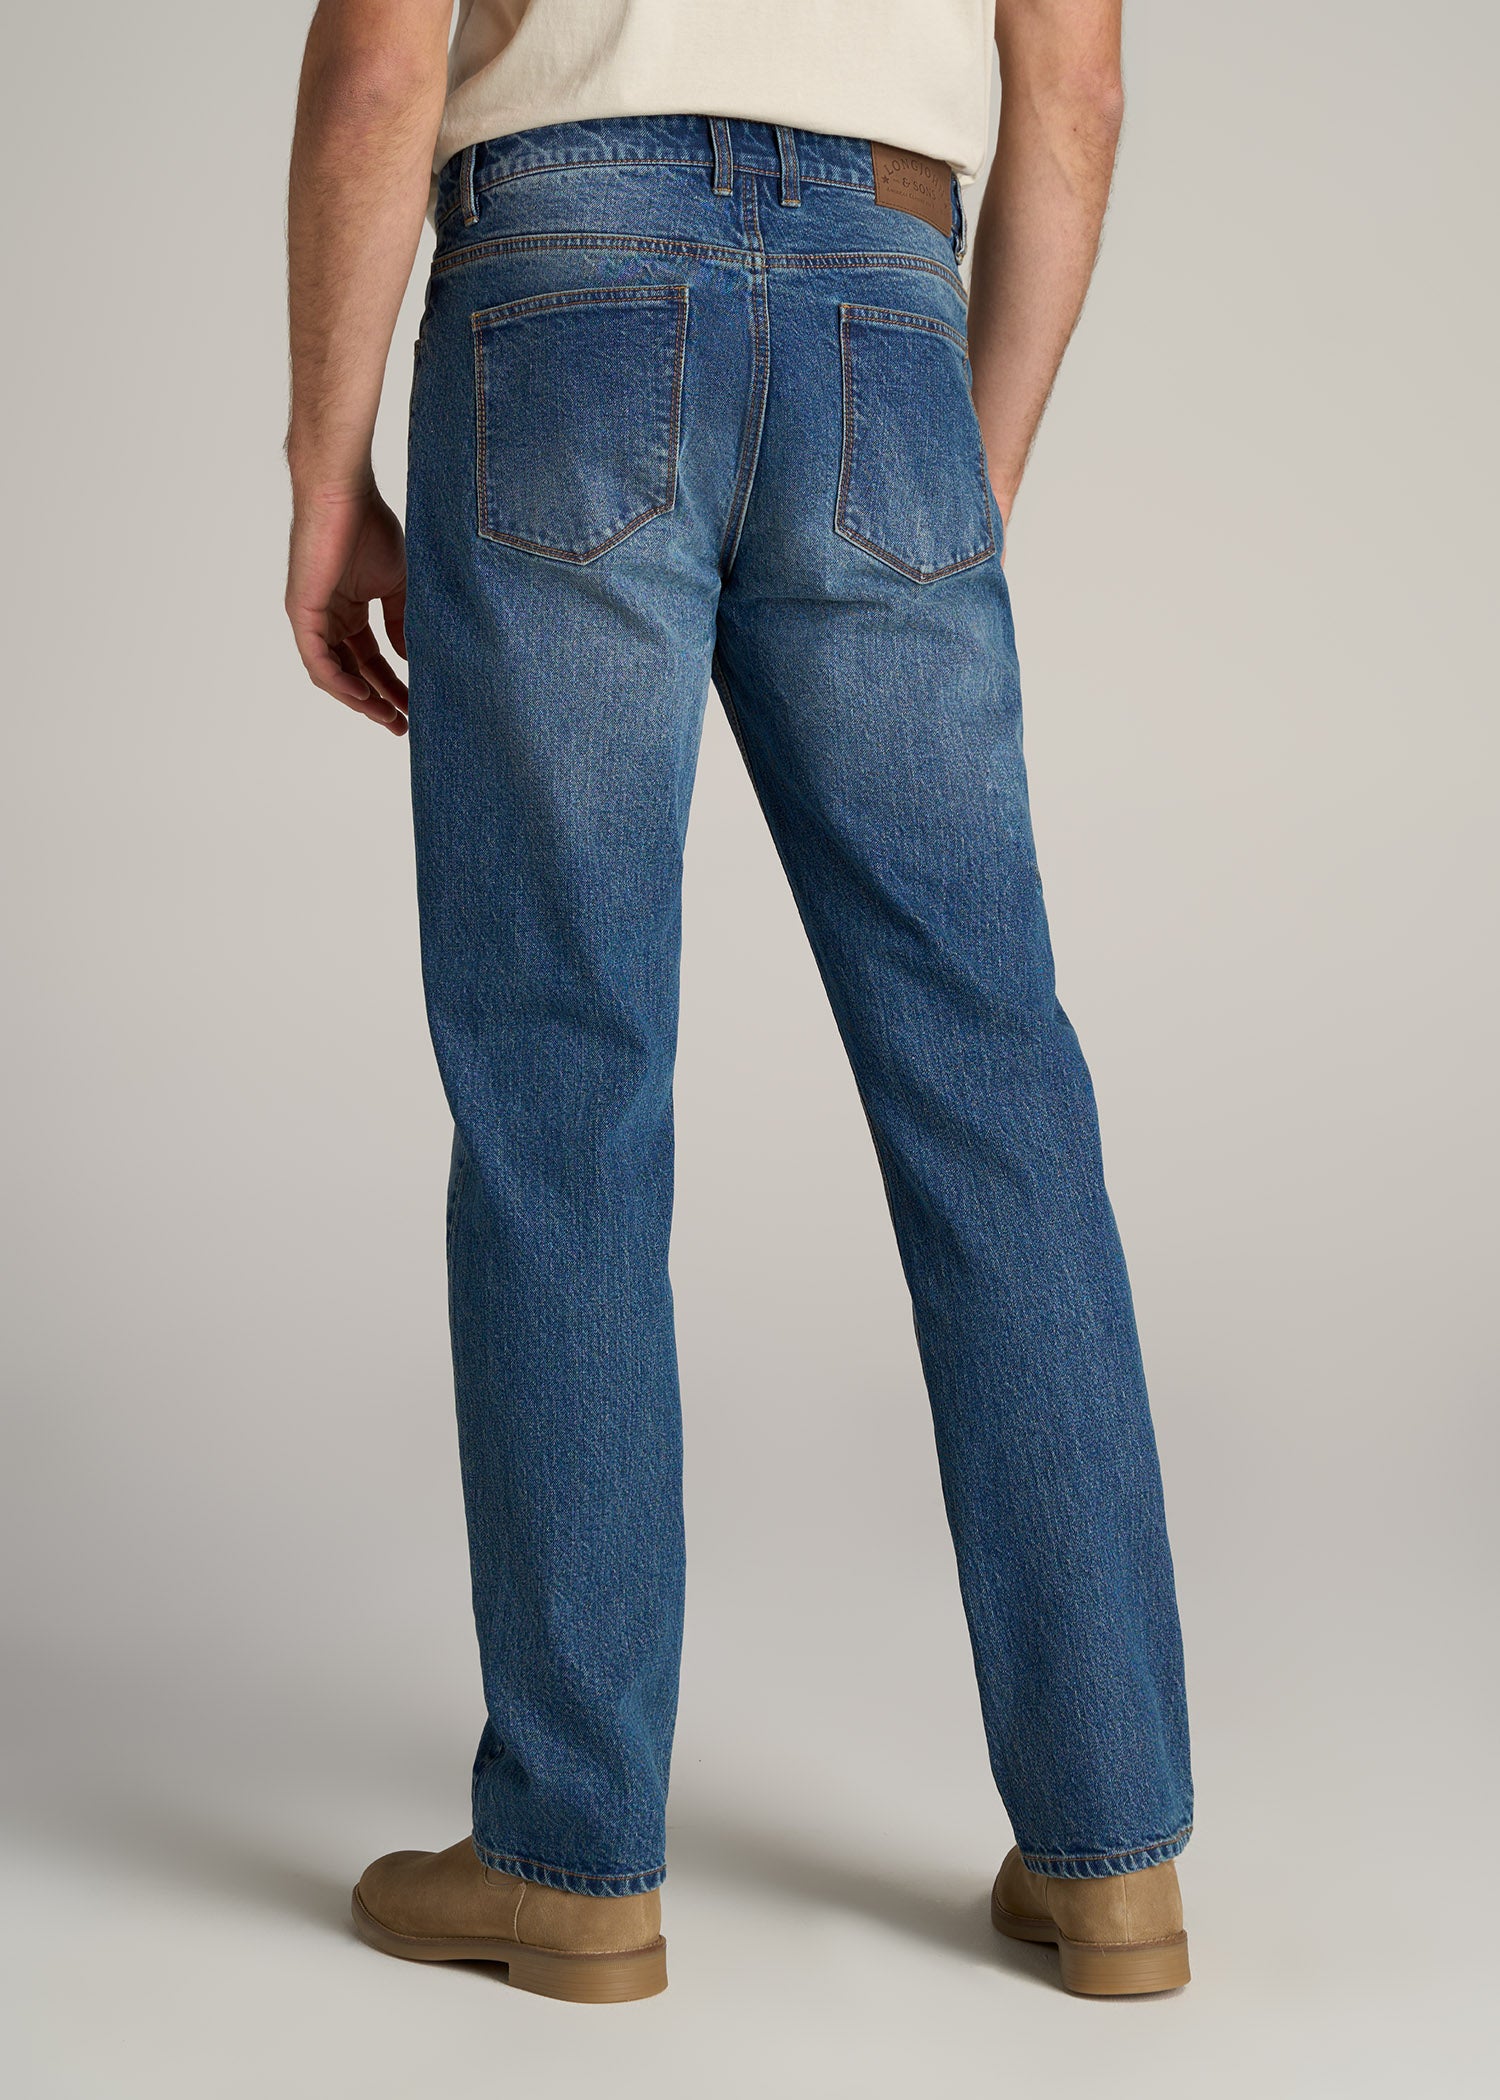 LJ&S Men's Tall Jeans Straight Leg Ranch Blue | American Tall